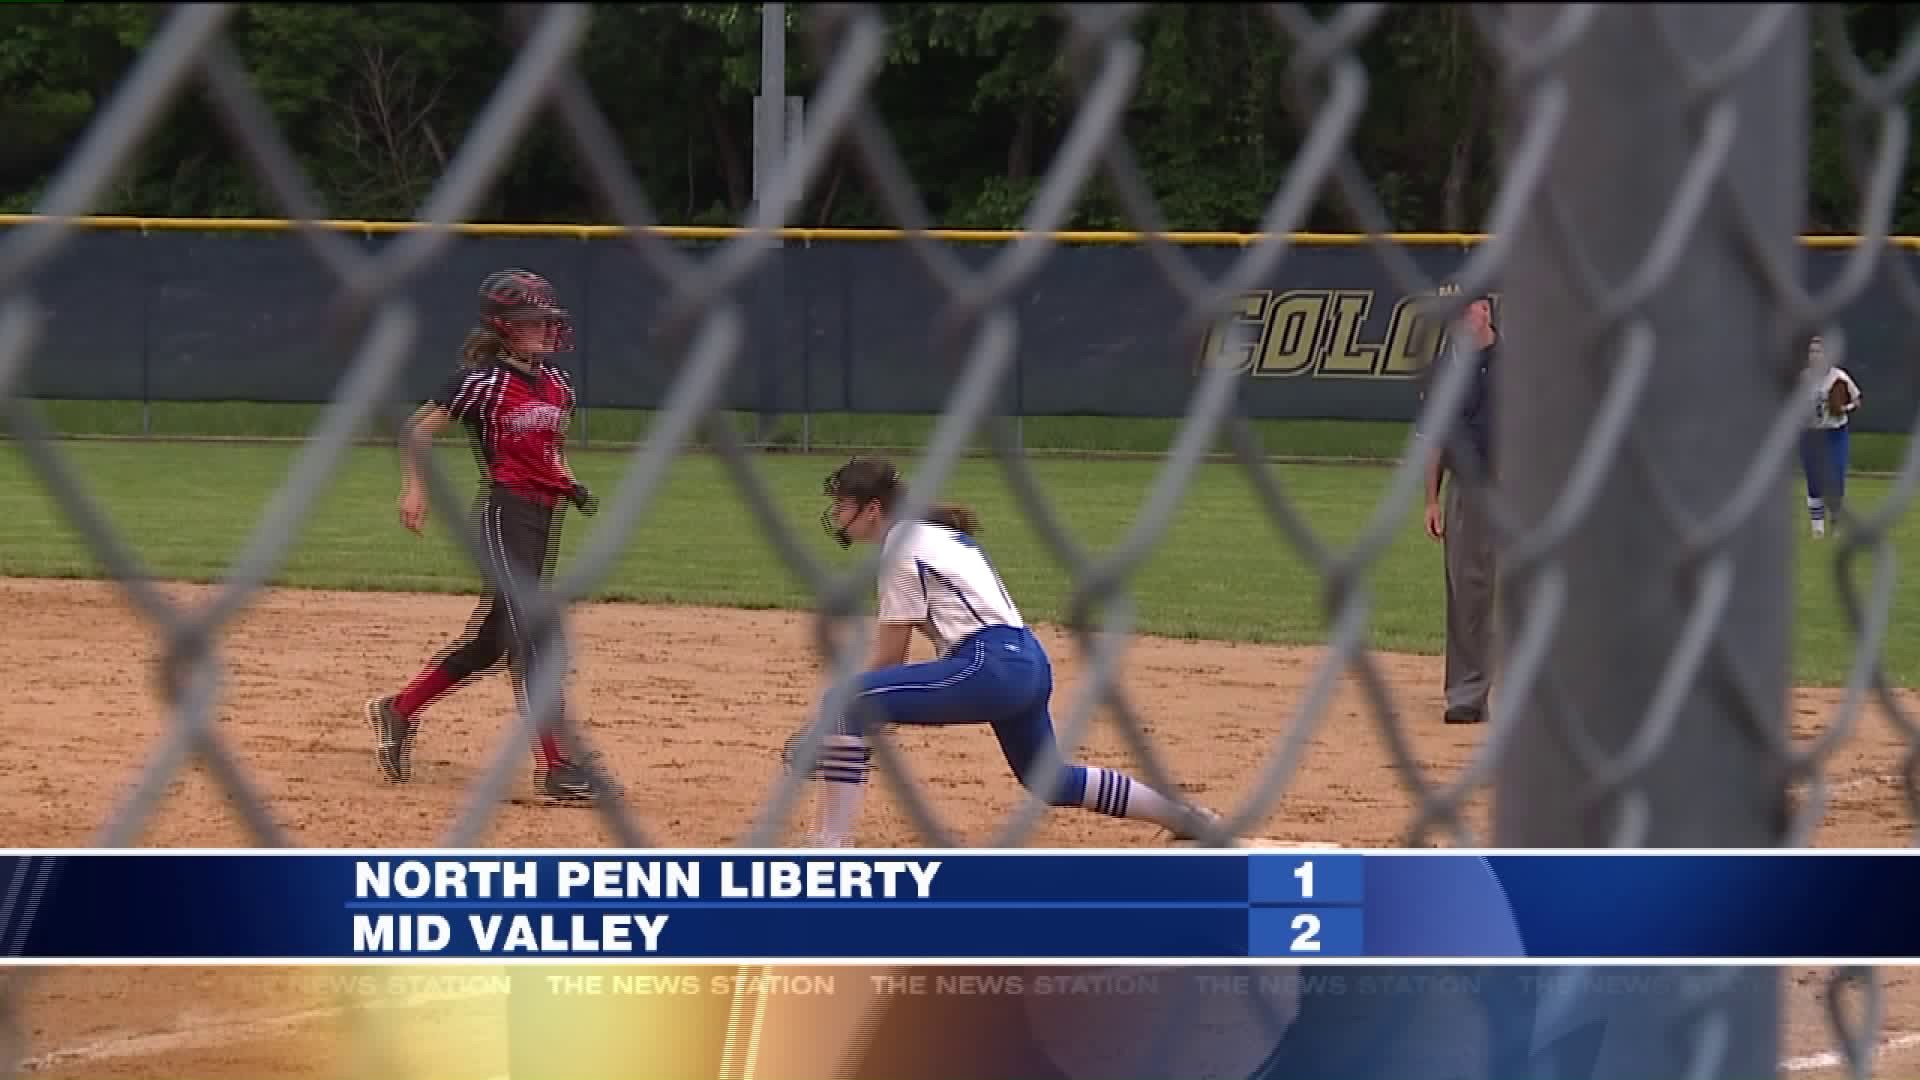 NP Liberty vs Mid Valley softball